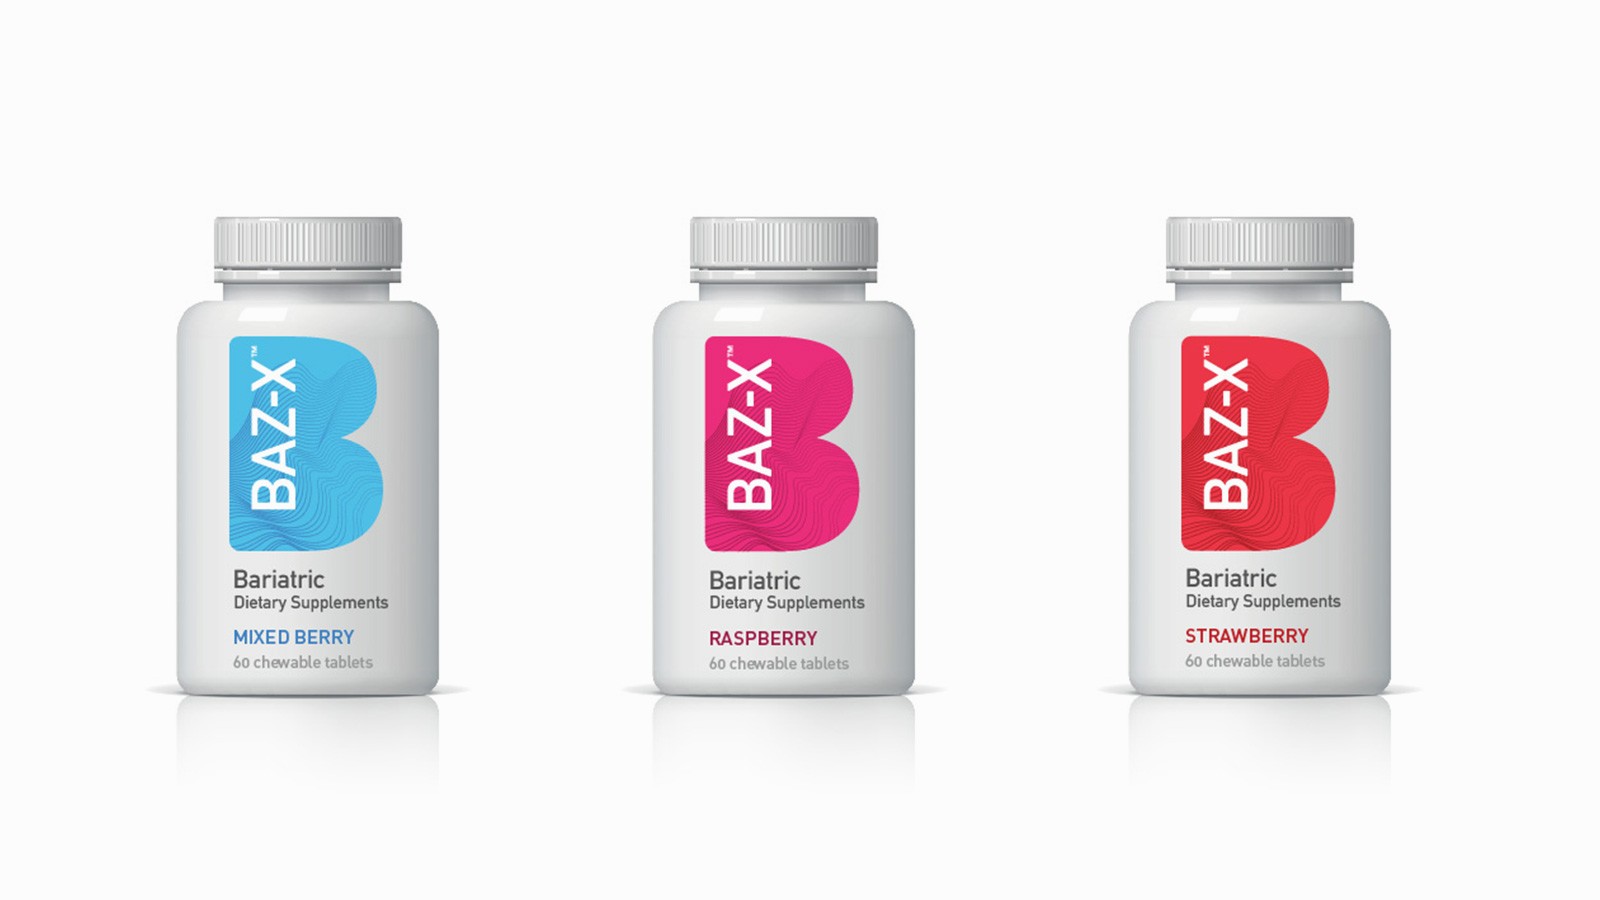 BAZ-X Bariatric Supplements | Supplement Bottle Packaging